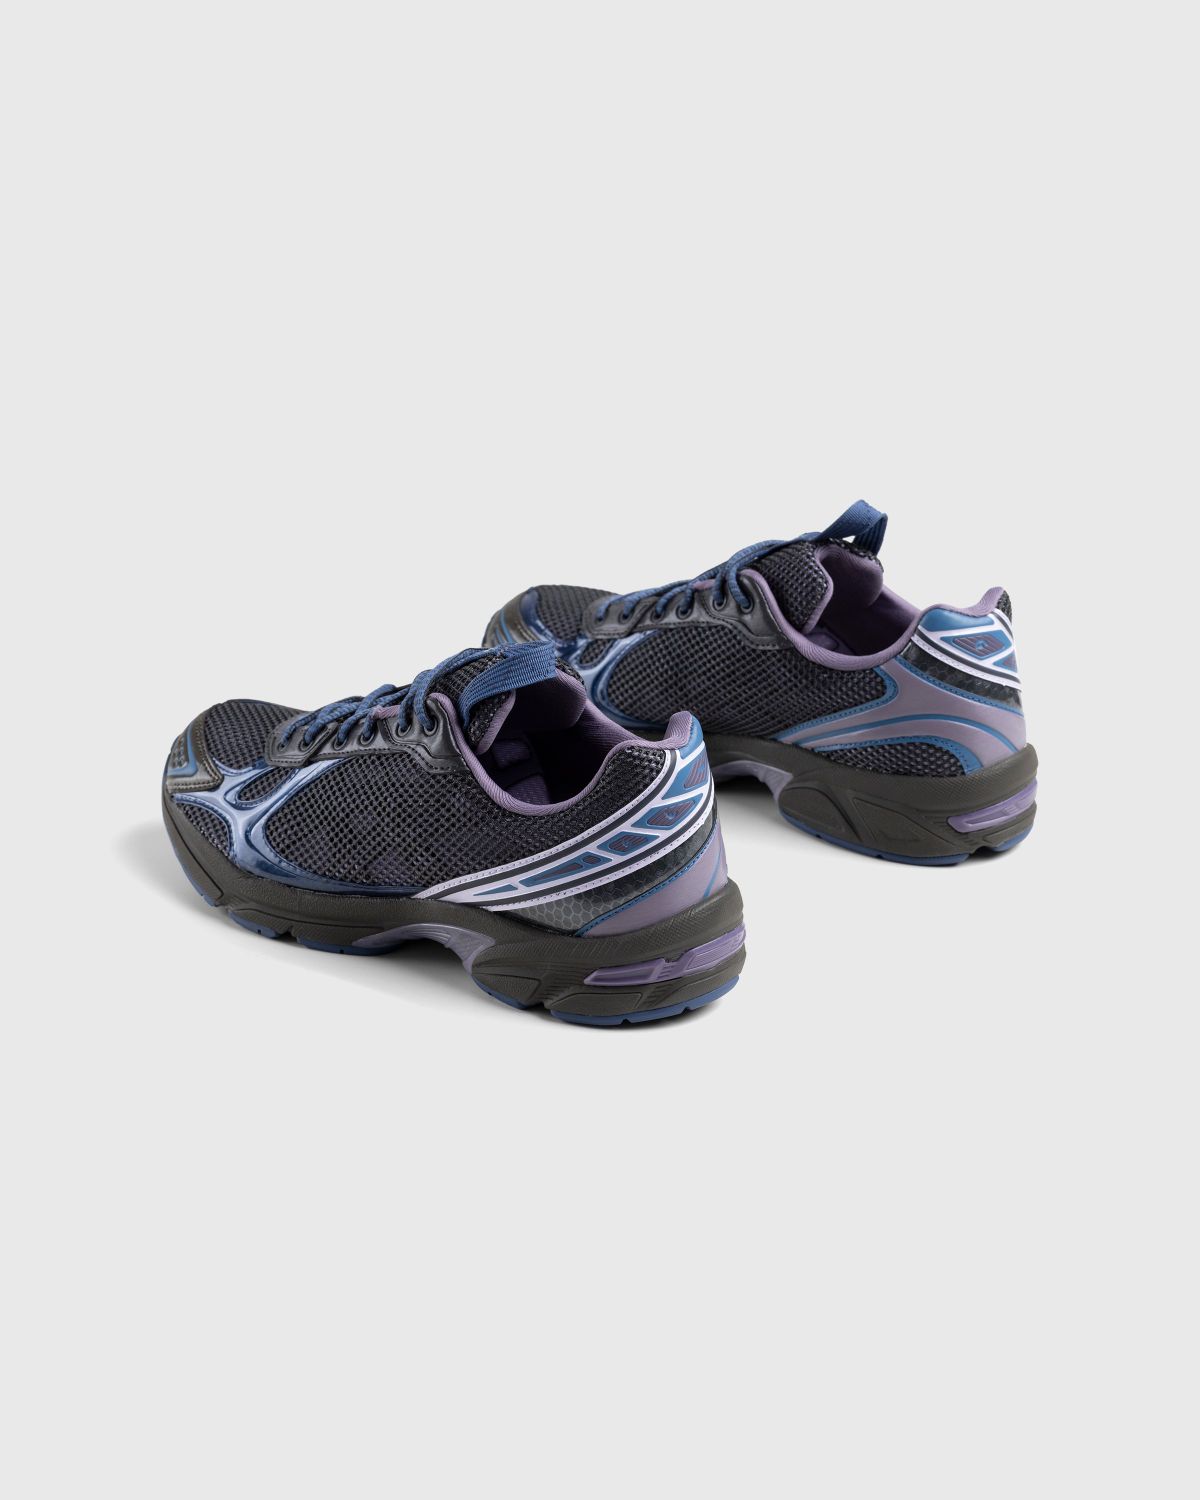 asics – UB4-S Gel-1130 Graphite Grey/Grand Shark - Low Top Sneakers - Black - Image 5